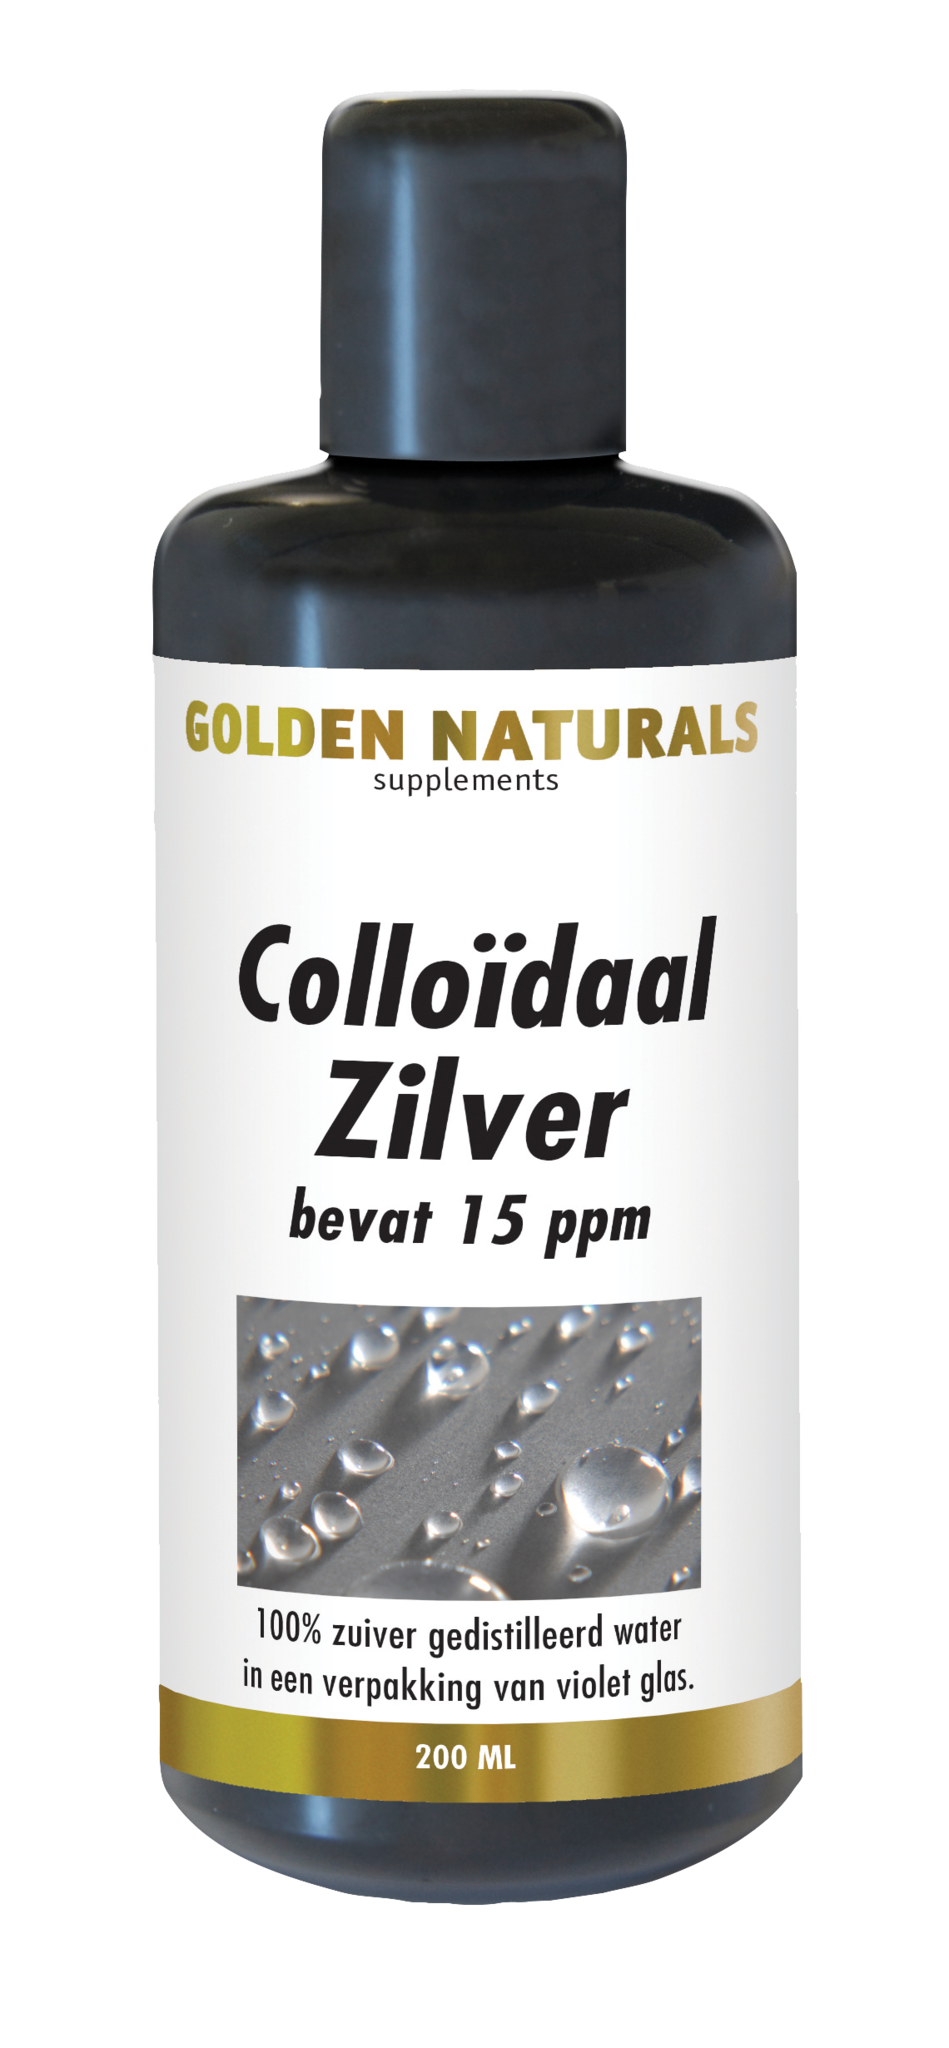 Golden Naturals Golden Naturals ColloÃƒÂ¯daal Zilver